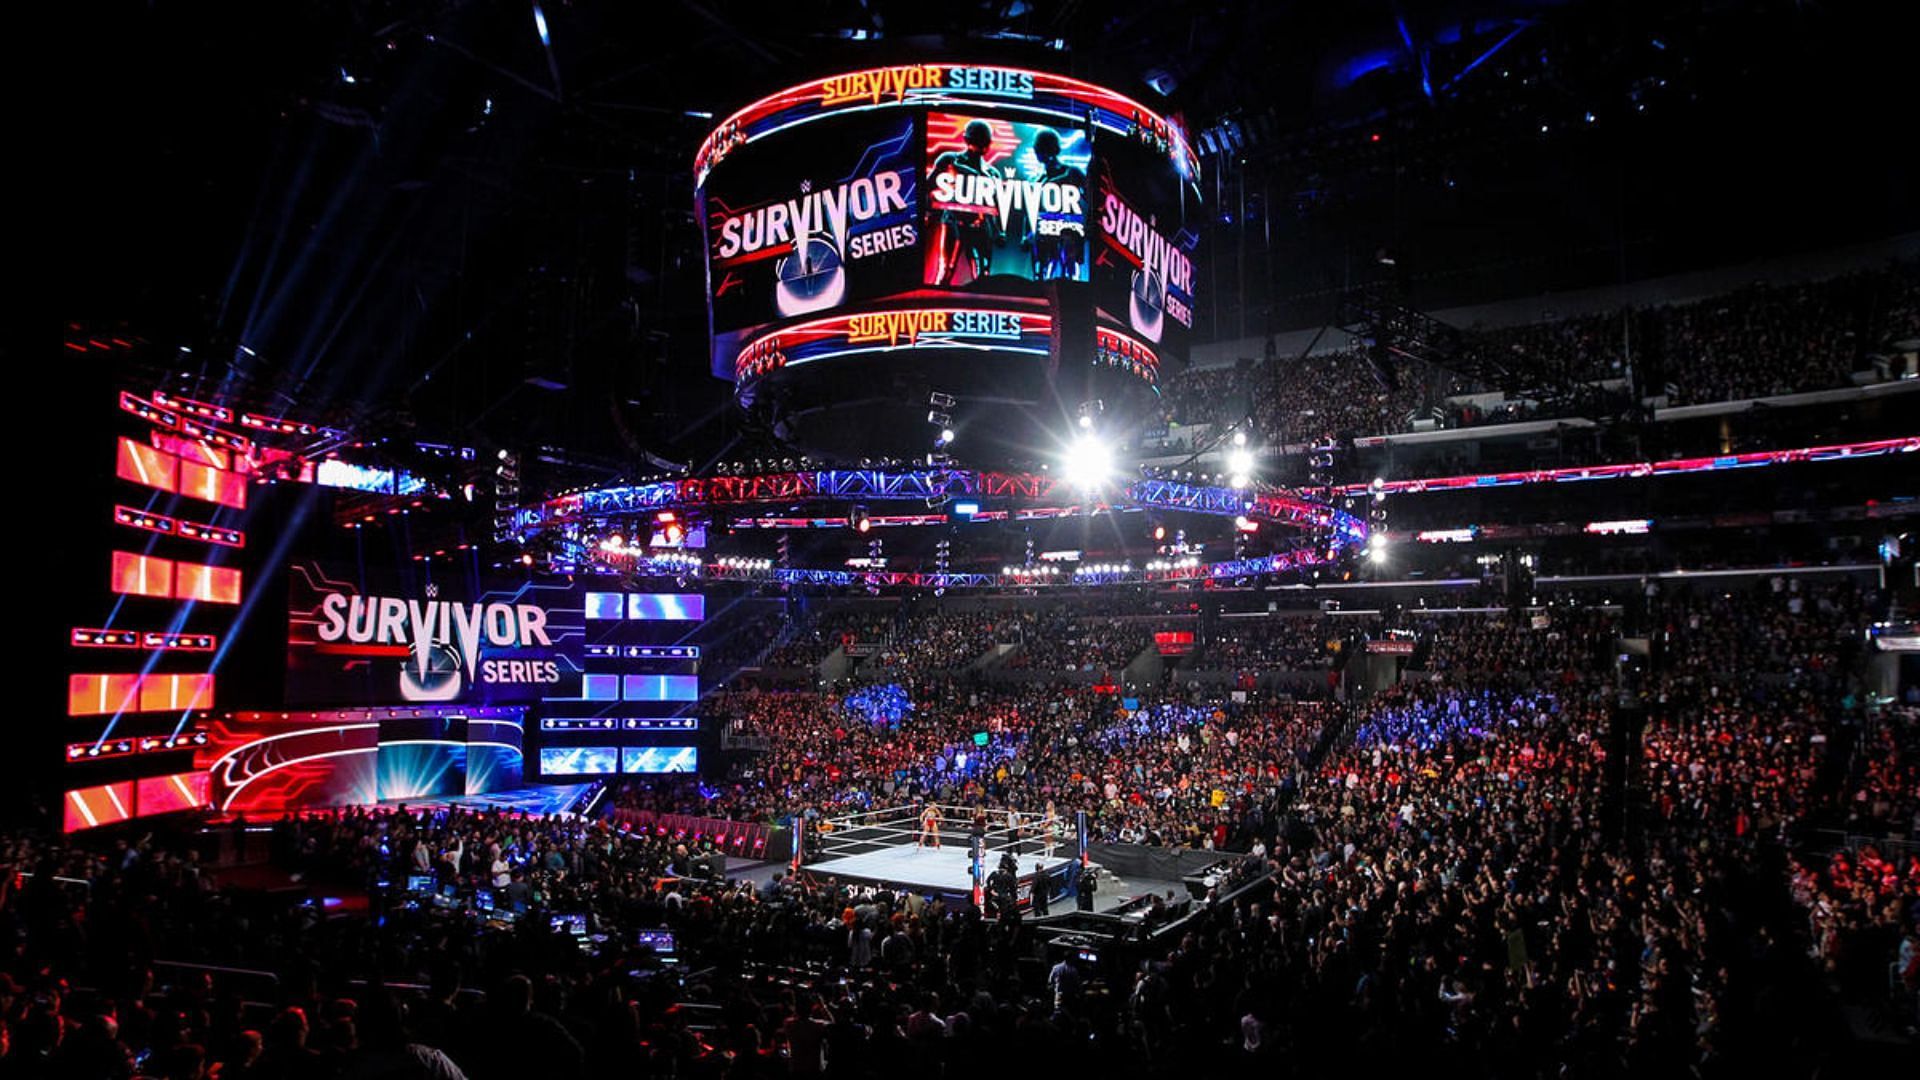 Survivor Series arena. Image Credits: wwe.com 